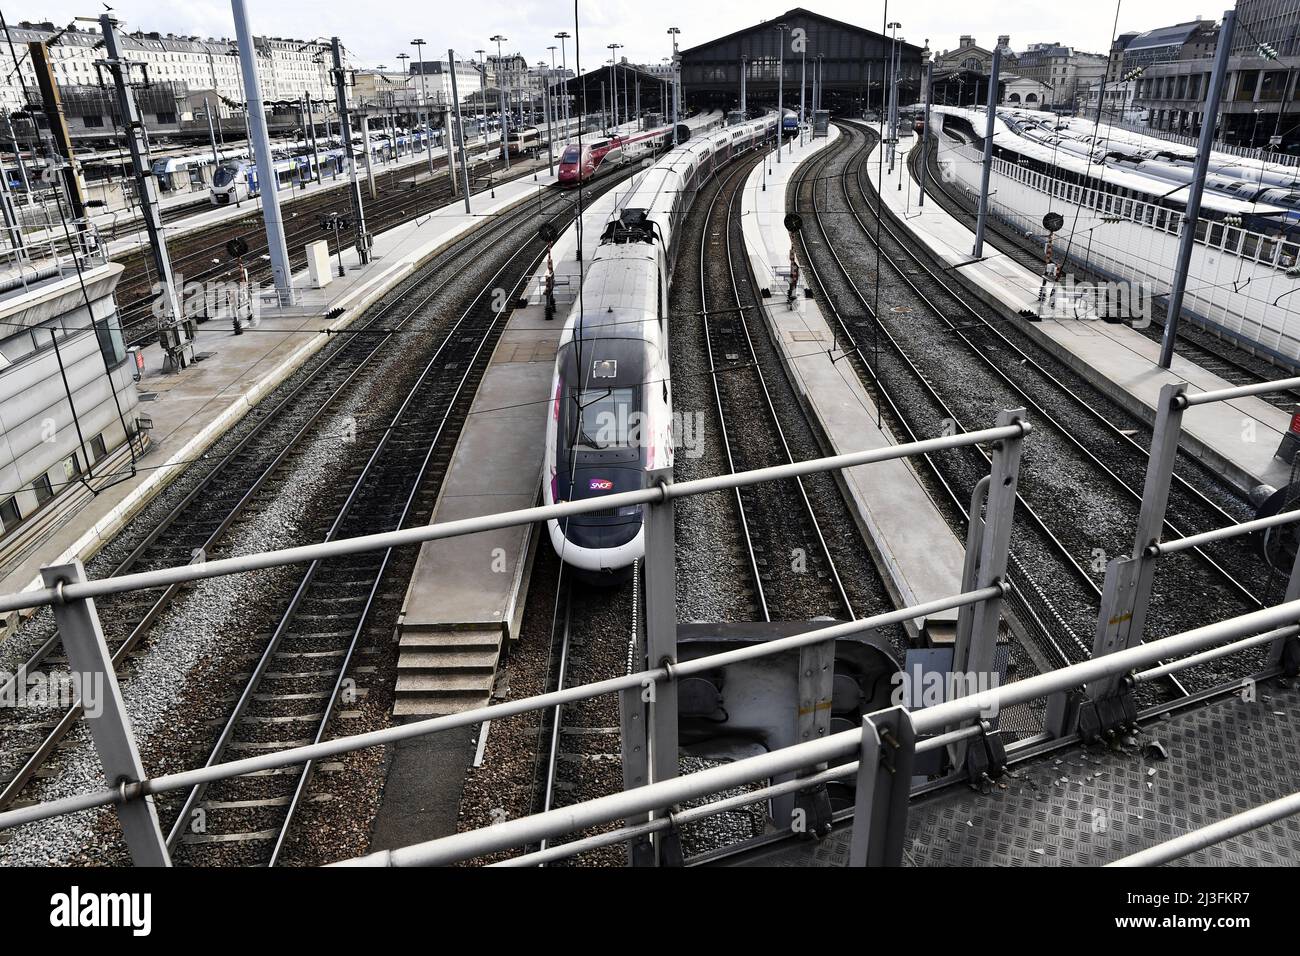 Trains in Gare du Nord - Paris - France Stock Photo